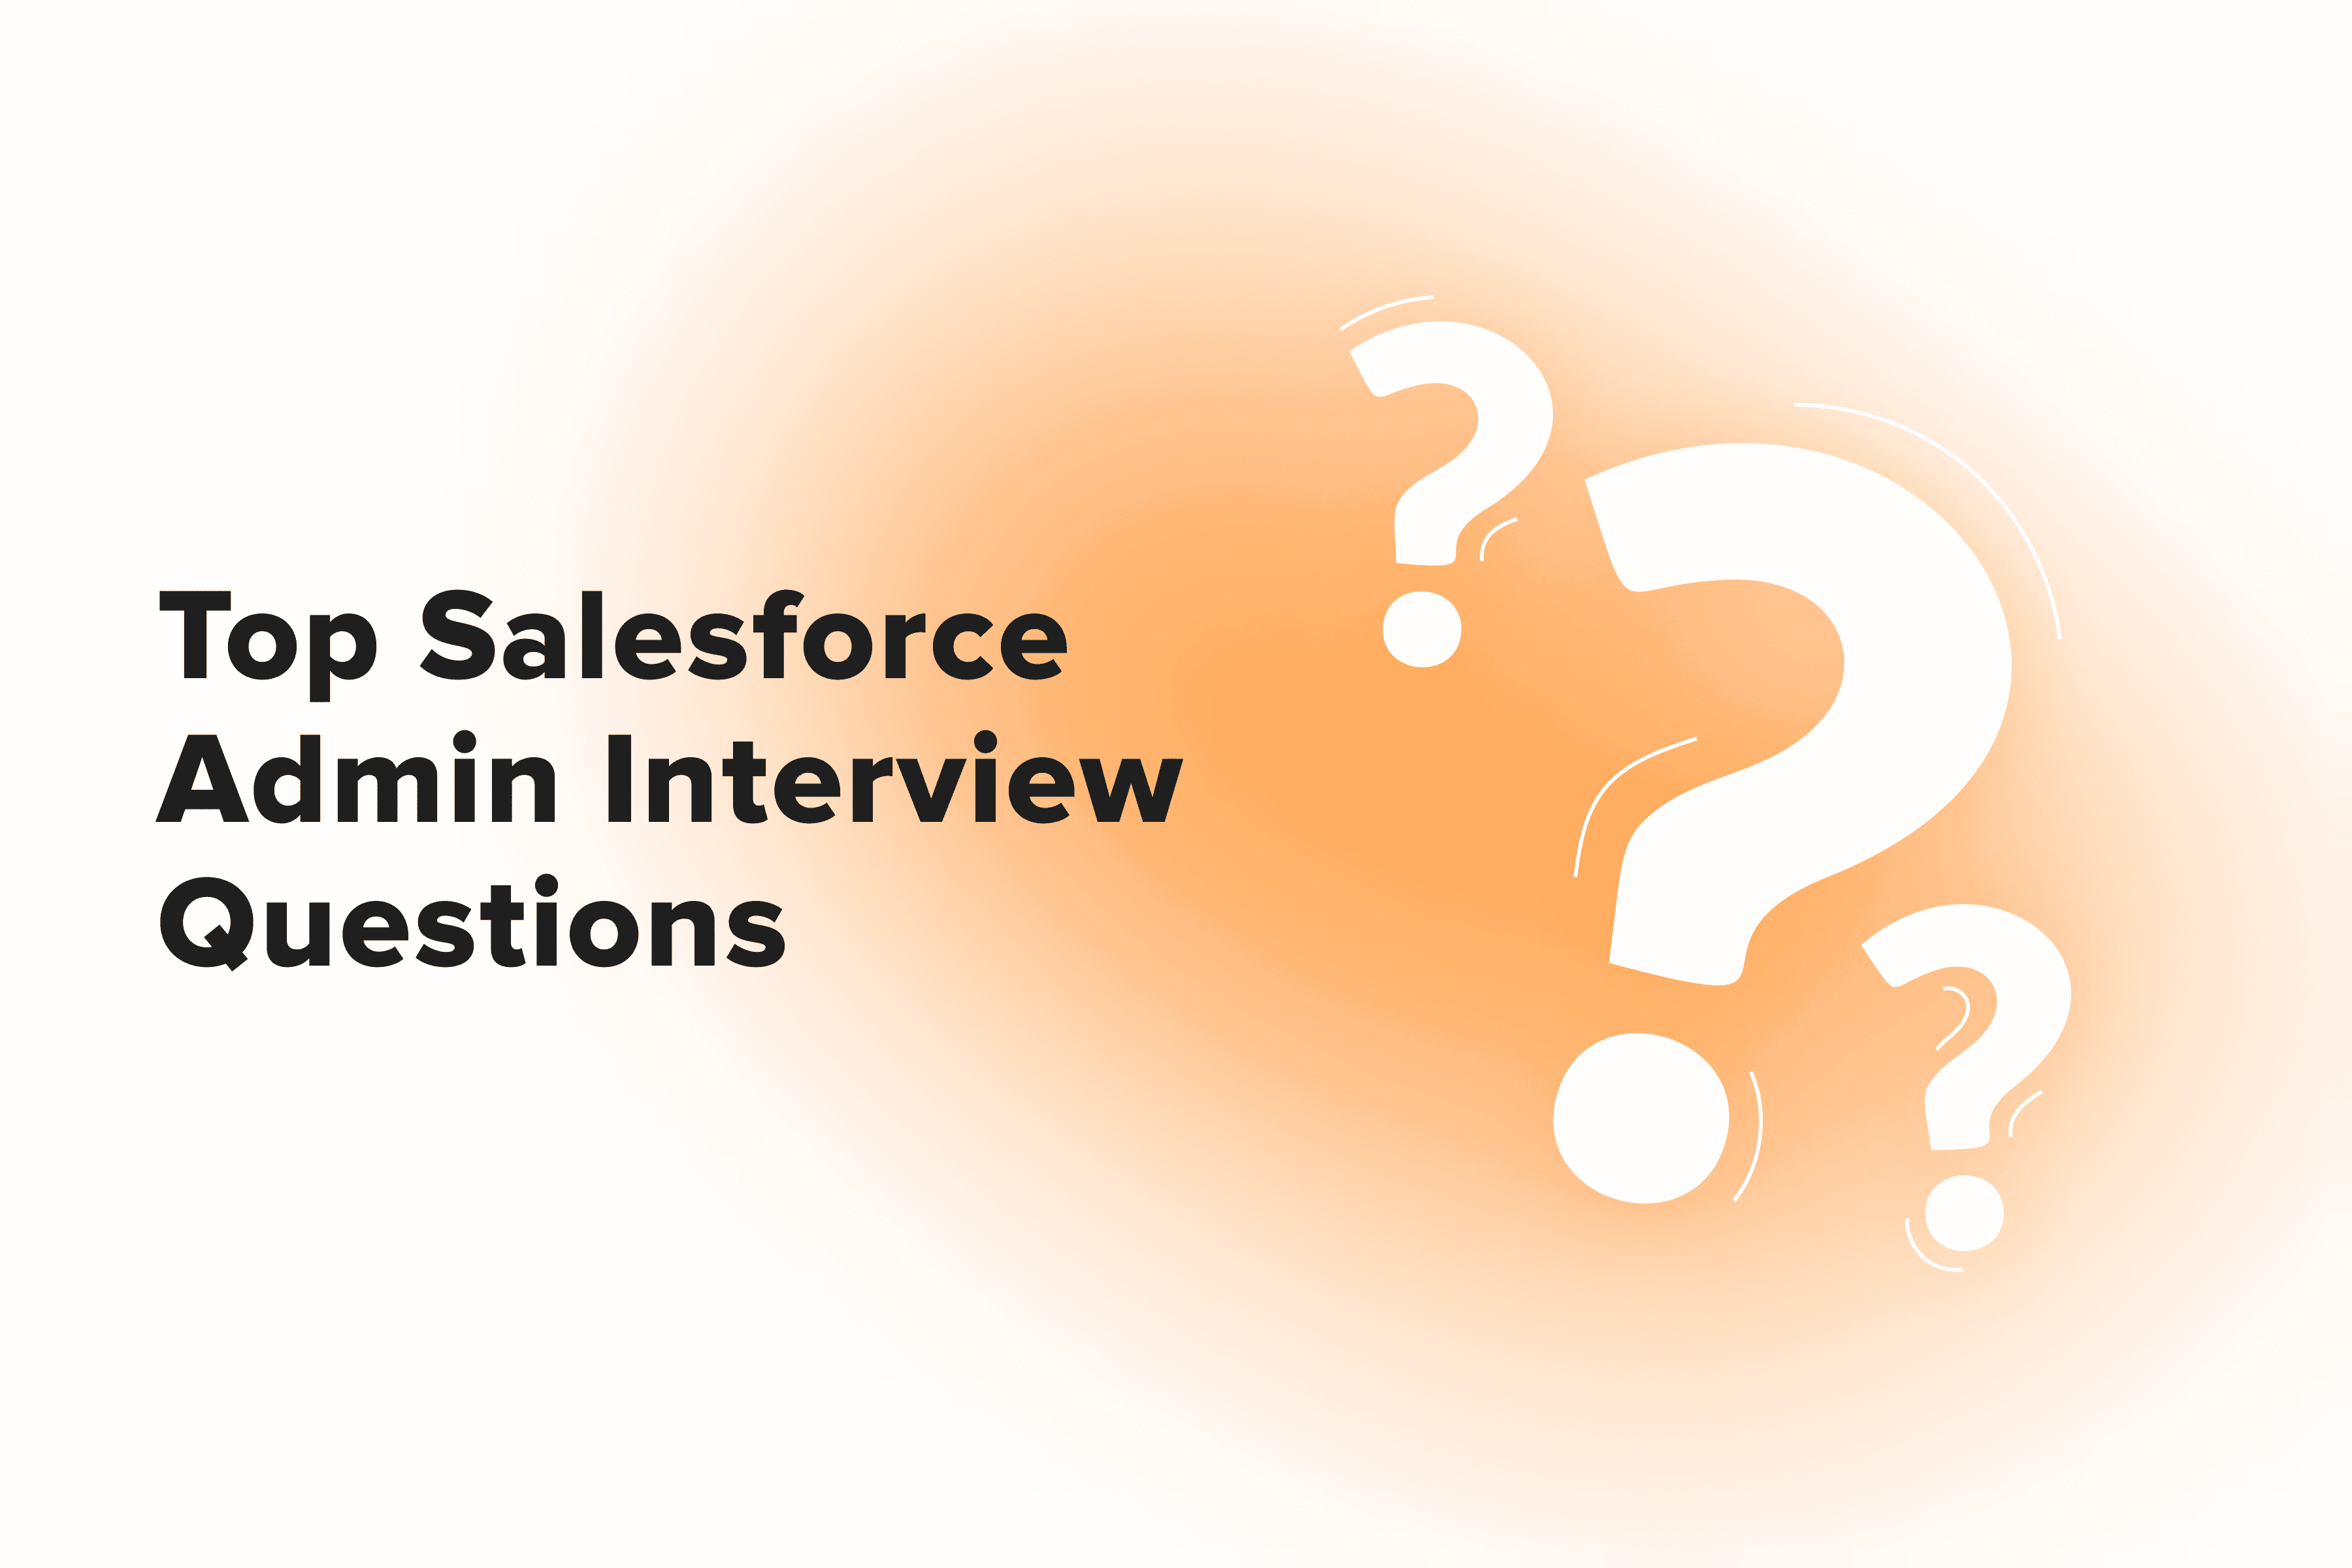 Salesforce Admin Interview Questions